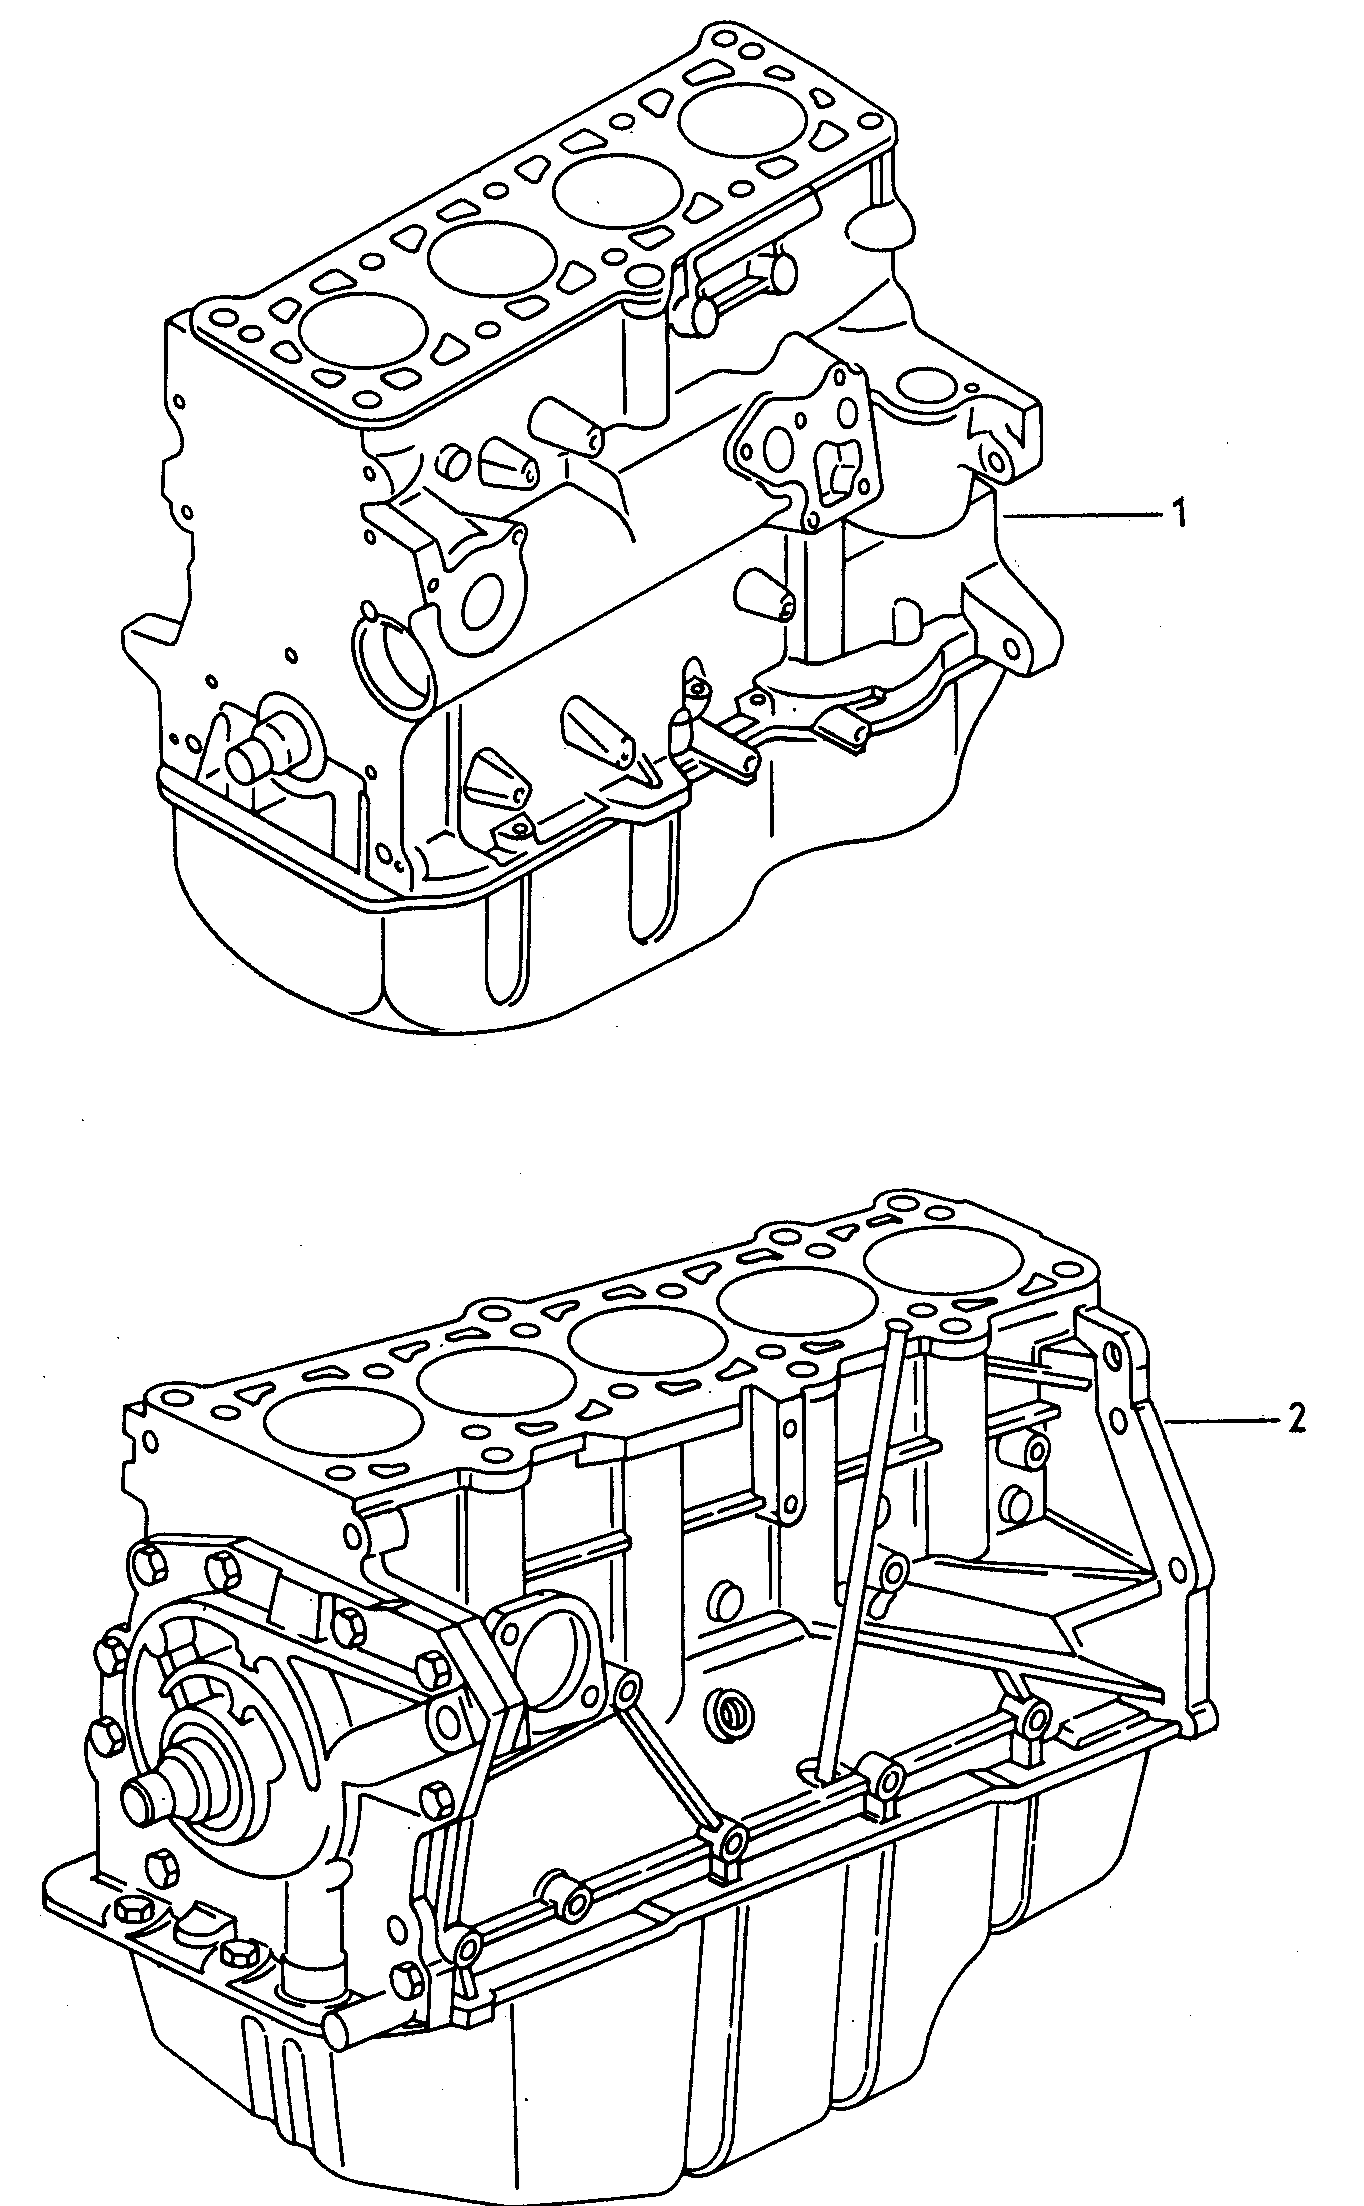 Teilmotor mit Kurbelwelle,<br>Kolben, Ölpumpe und Ölwanne  - Audi Coupe - aco